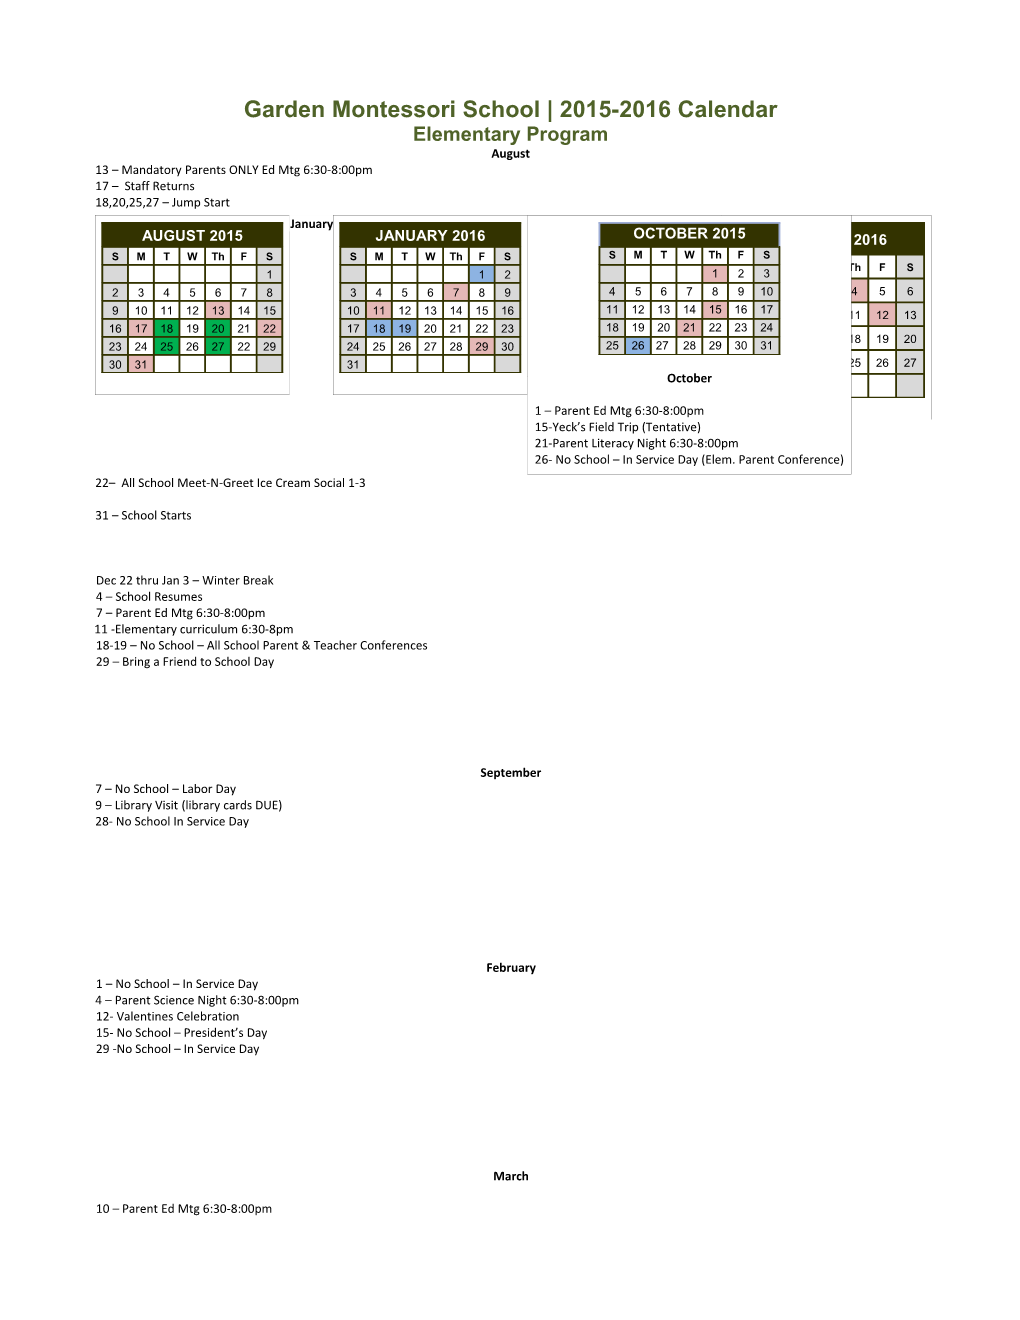 Garden Montessori School 2015-2016 Calendar